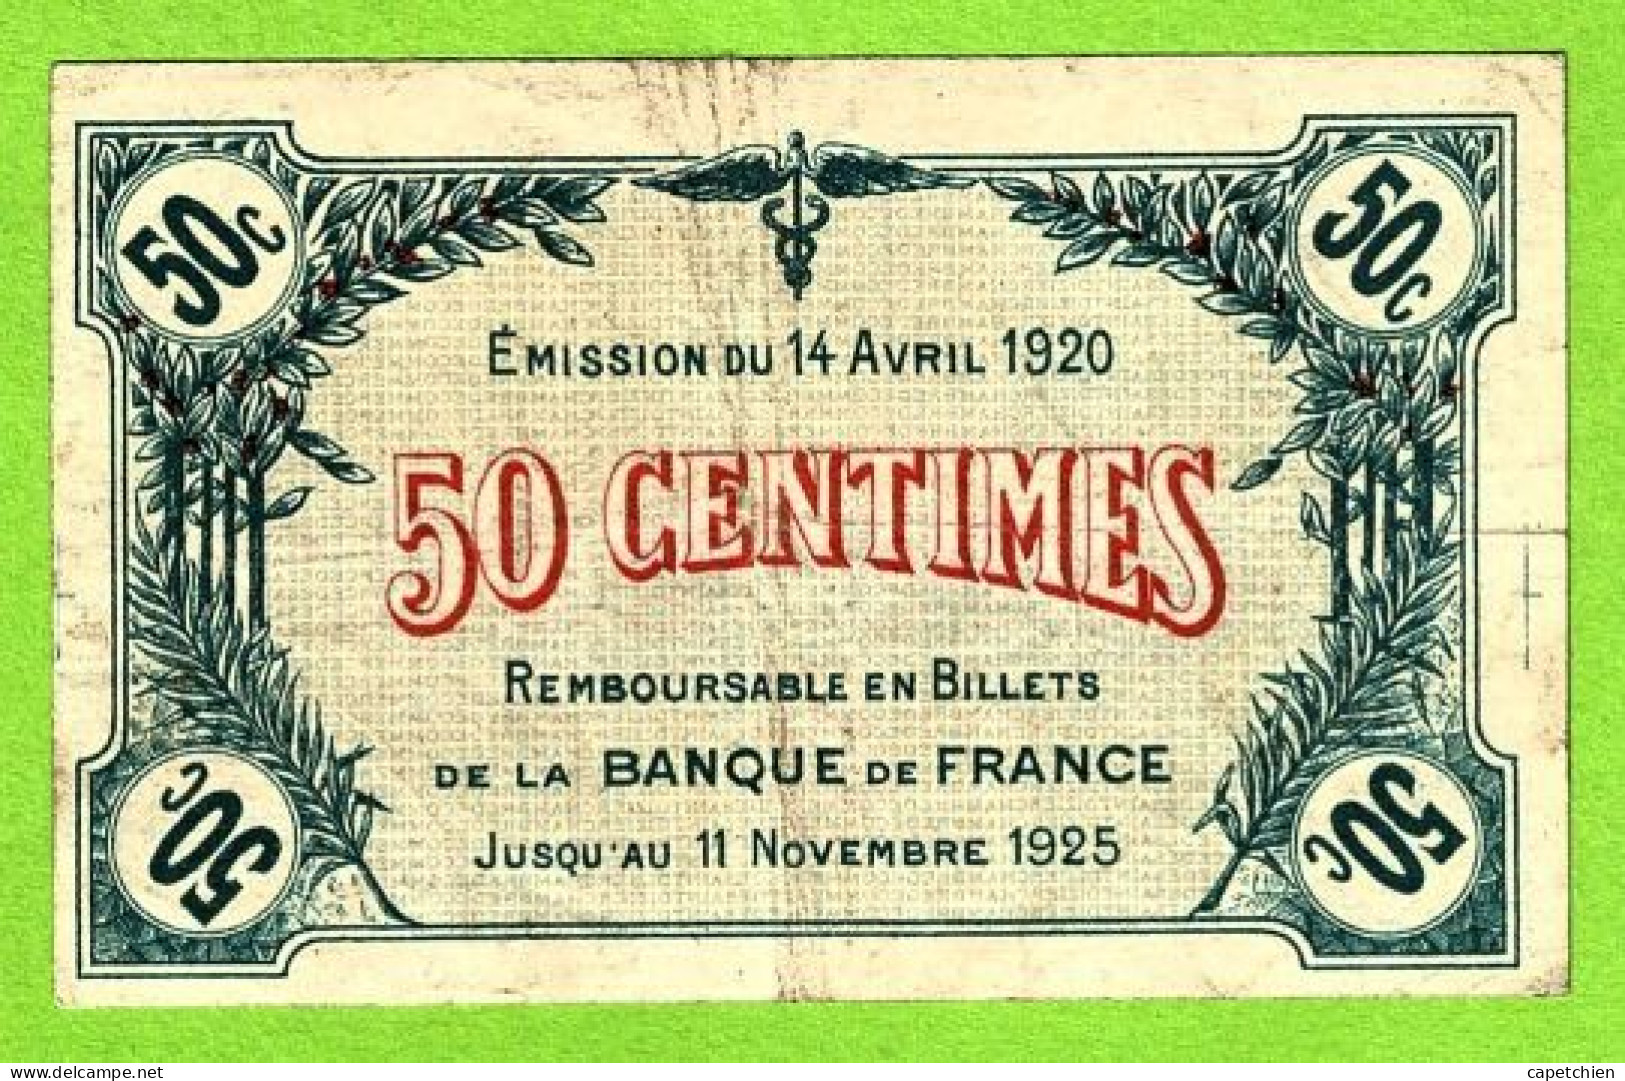 FRANCE / CHAMBRE De COMMERCE De SAINT DIZIER / 50 CENT./ 14 AVRIL 1920 / N° 053,108 / SERIE B - Handelskammer